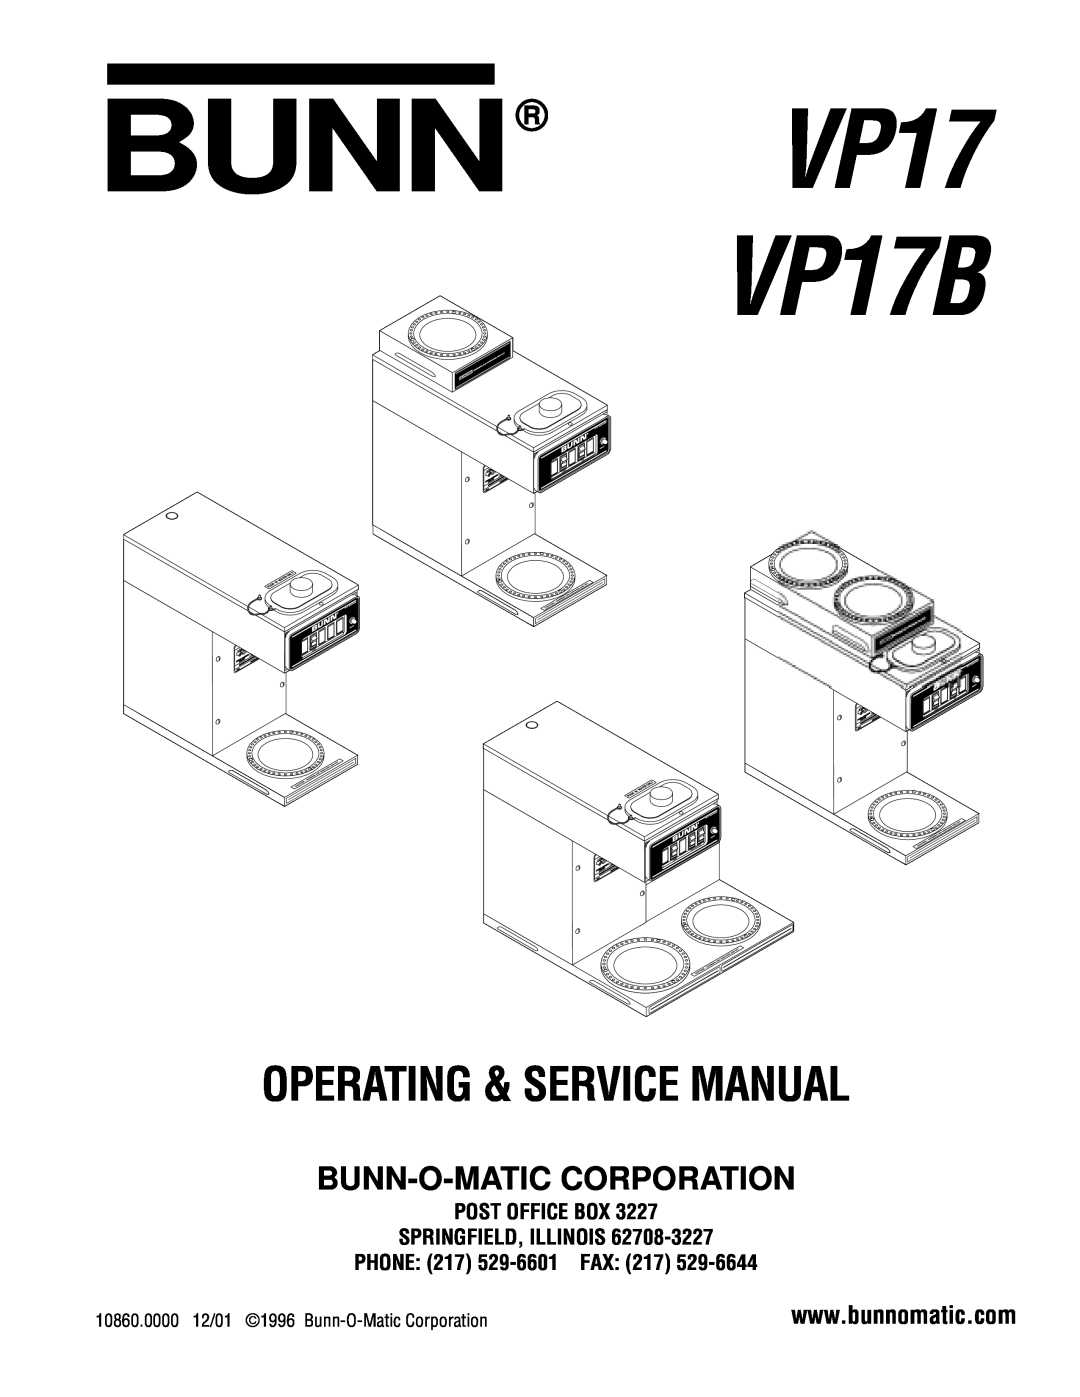 Bunn VP17 manual Bunn-O-Maticcorporation, Series, Service & Repair Manual, 46721.0000A 05/12 2012 Bunn-O-MaticCorporation 